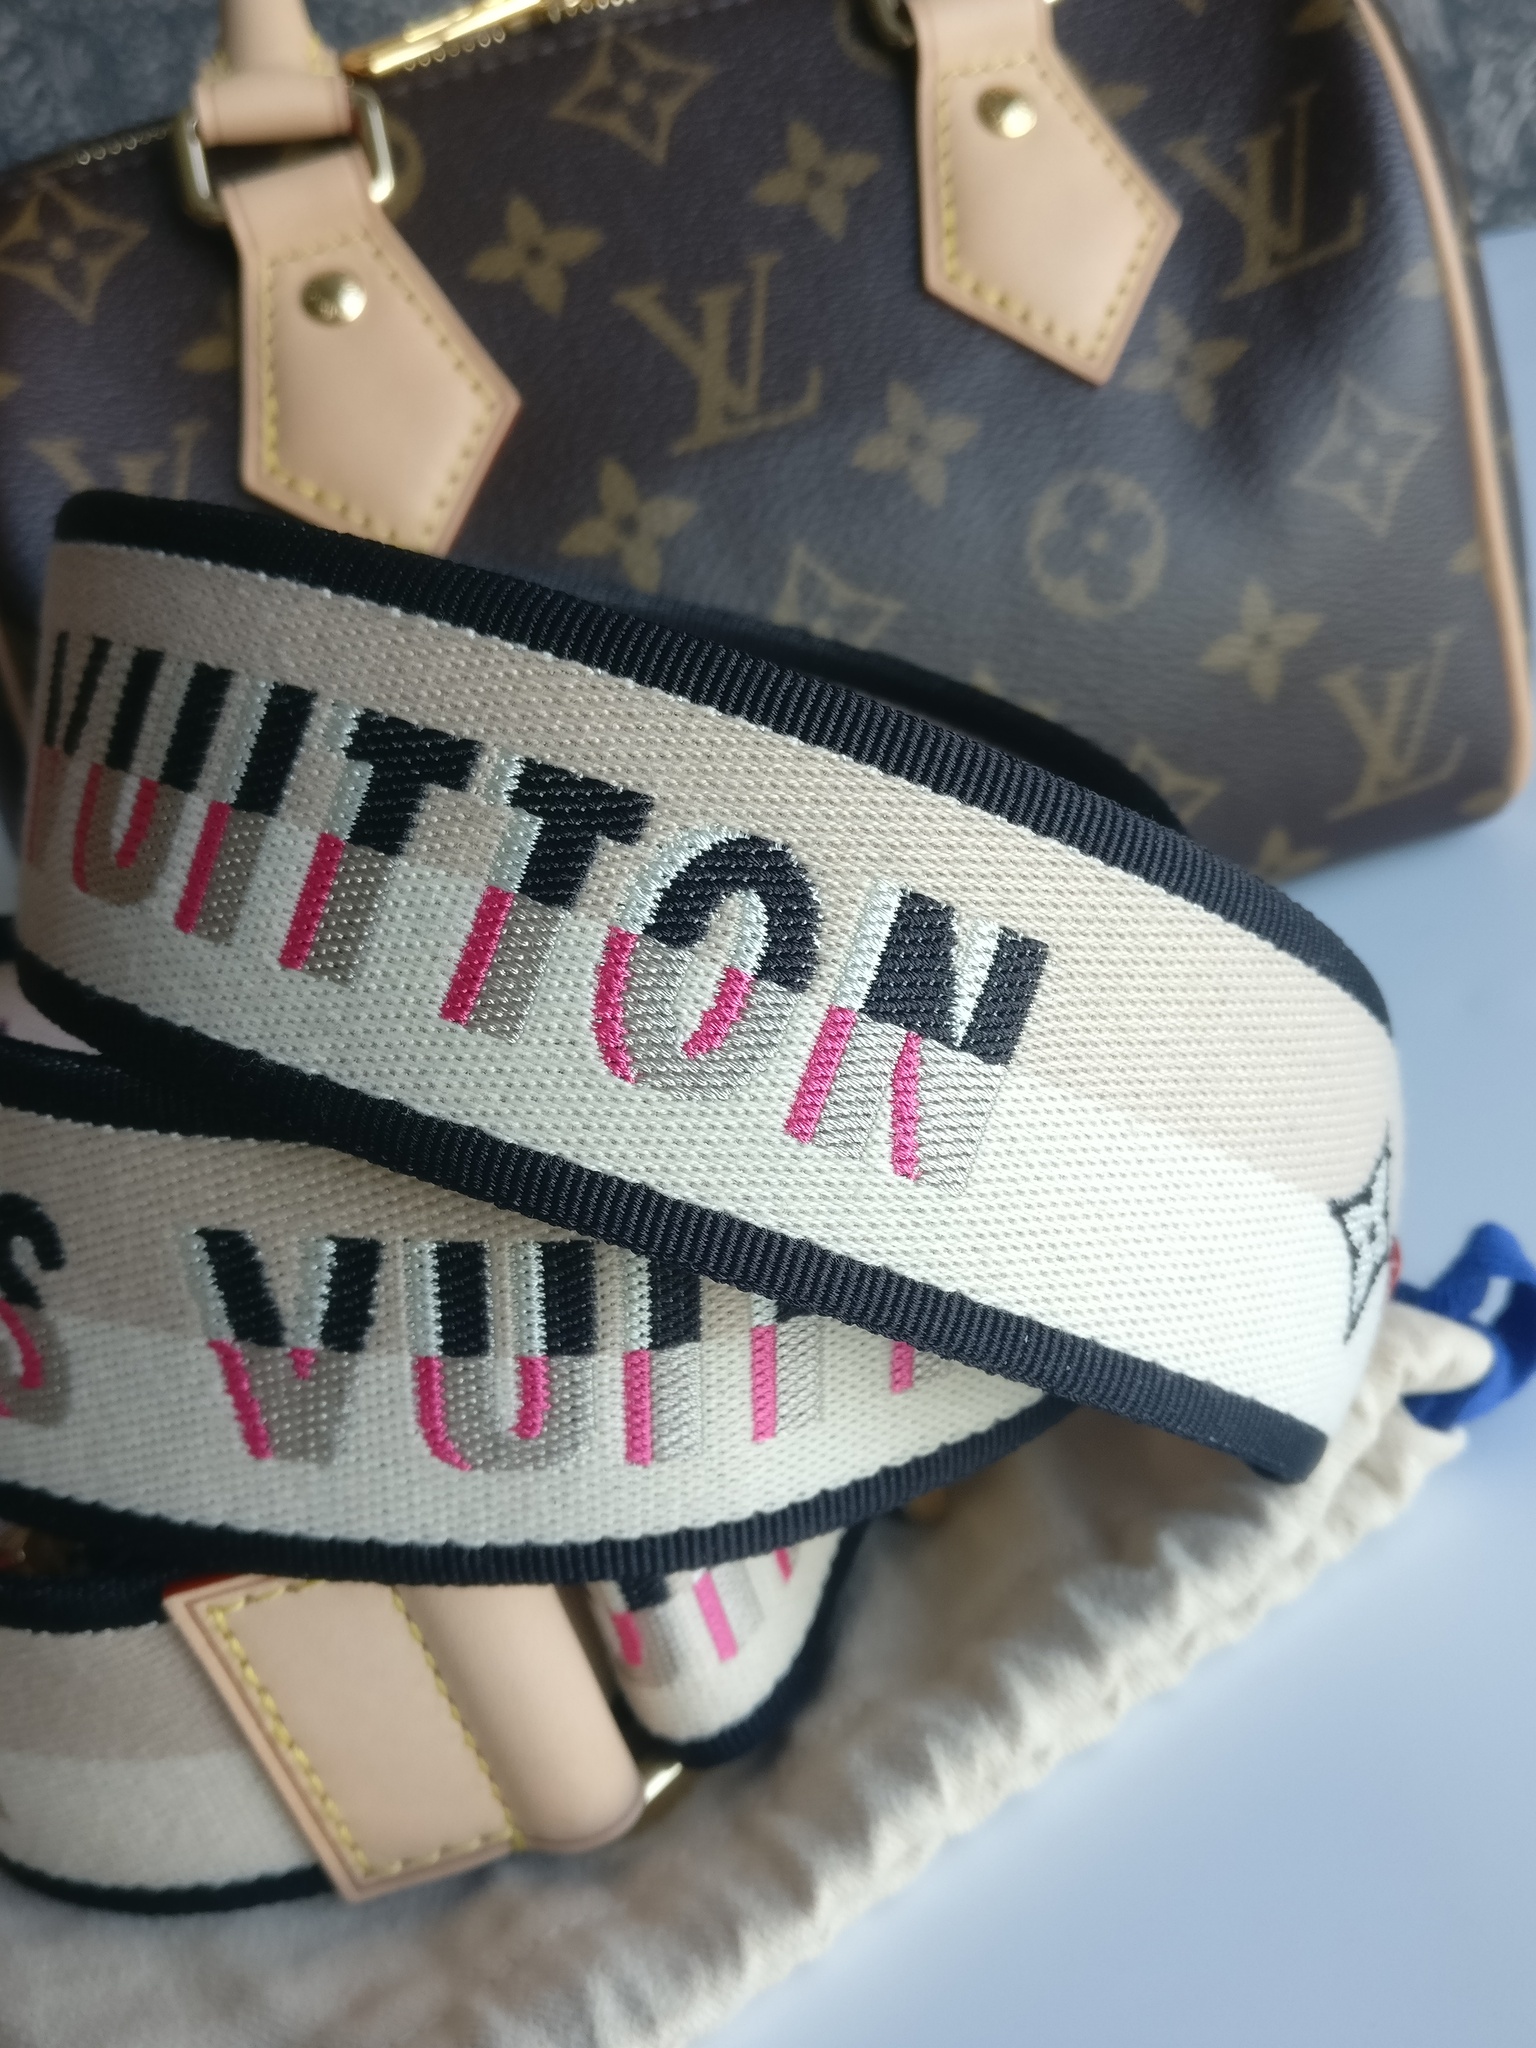 Louis Vuitton Speedy Bandouliere 20